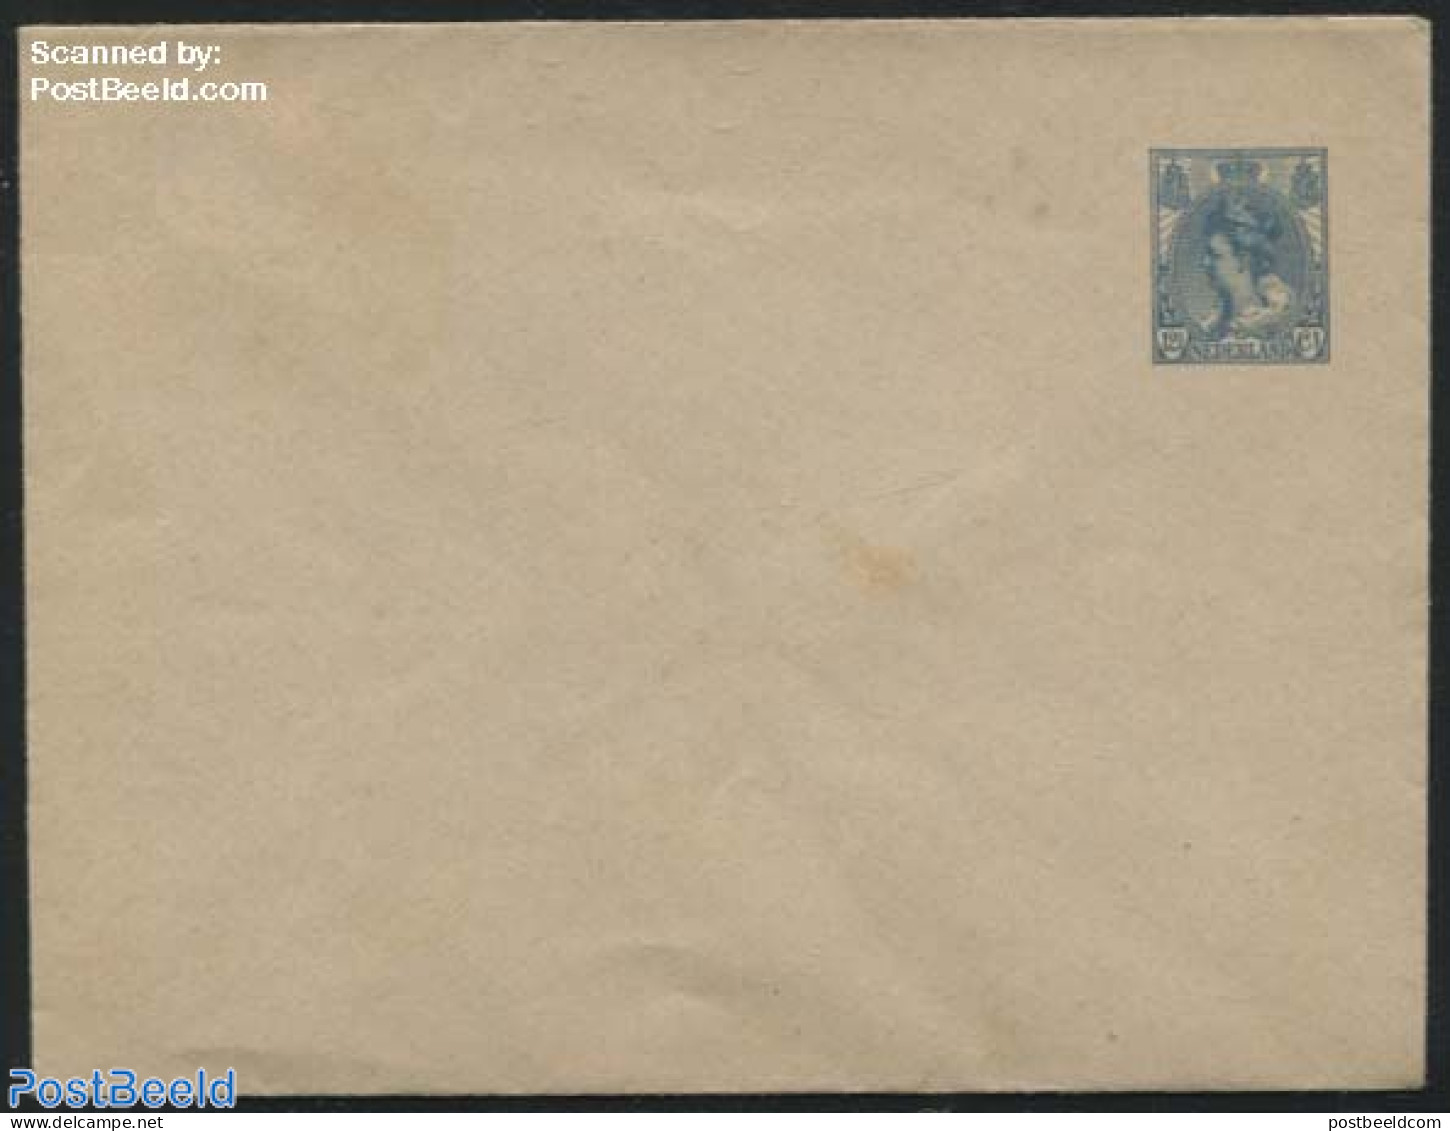 Netherlands 1899 Envelope 12.5c (146x111mm), Unused Postal Stationary - Storia Postale